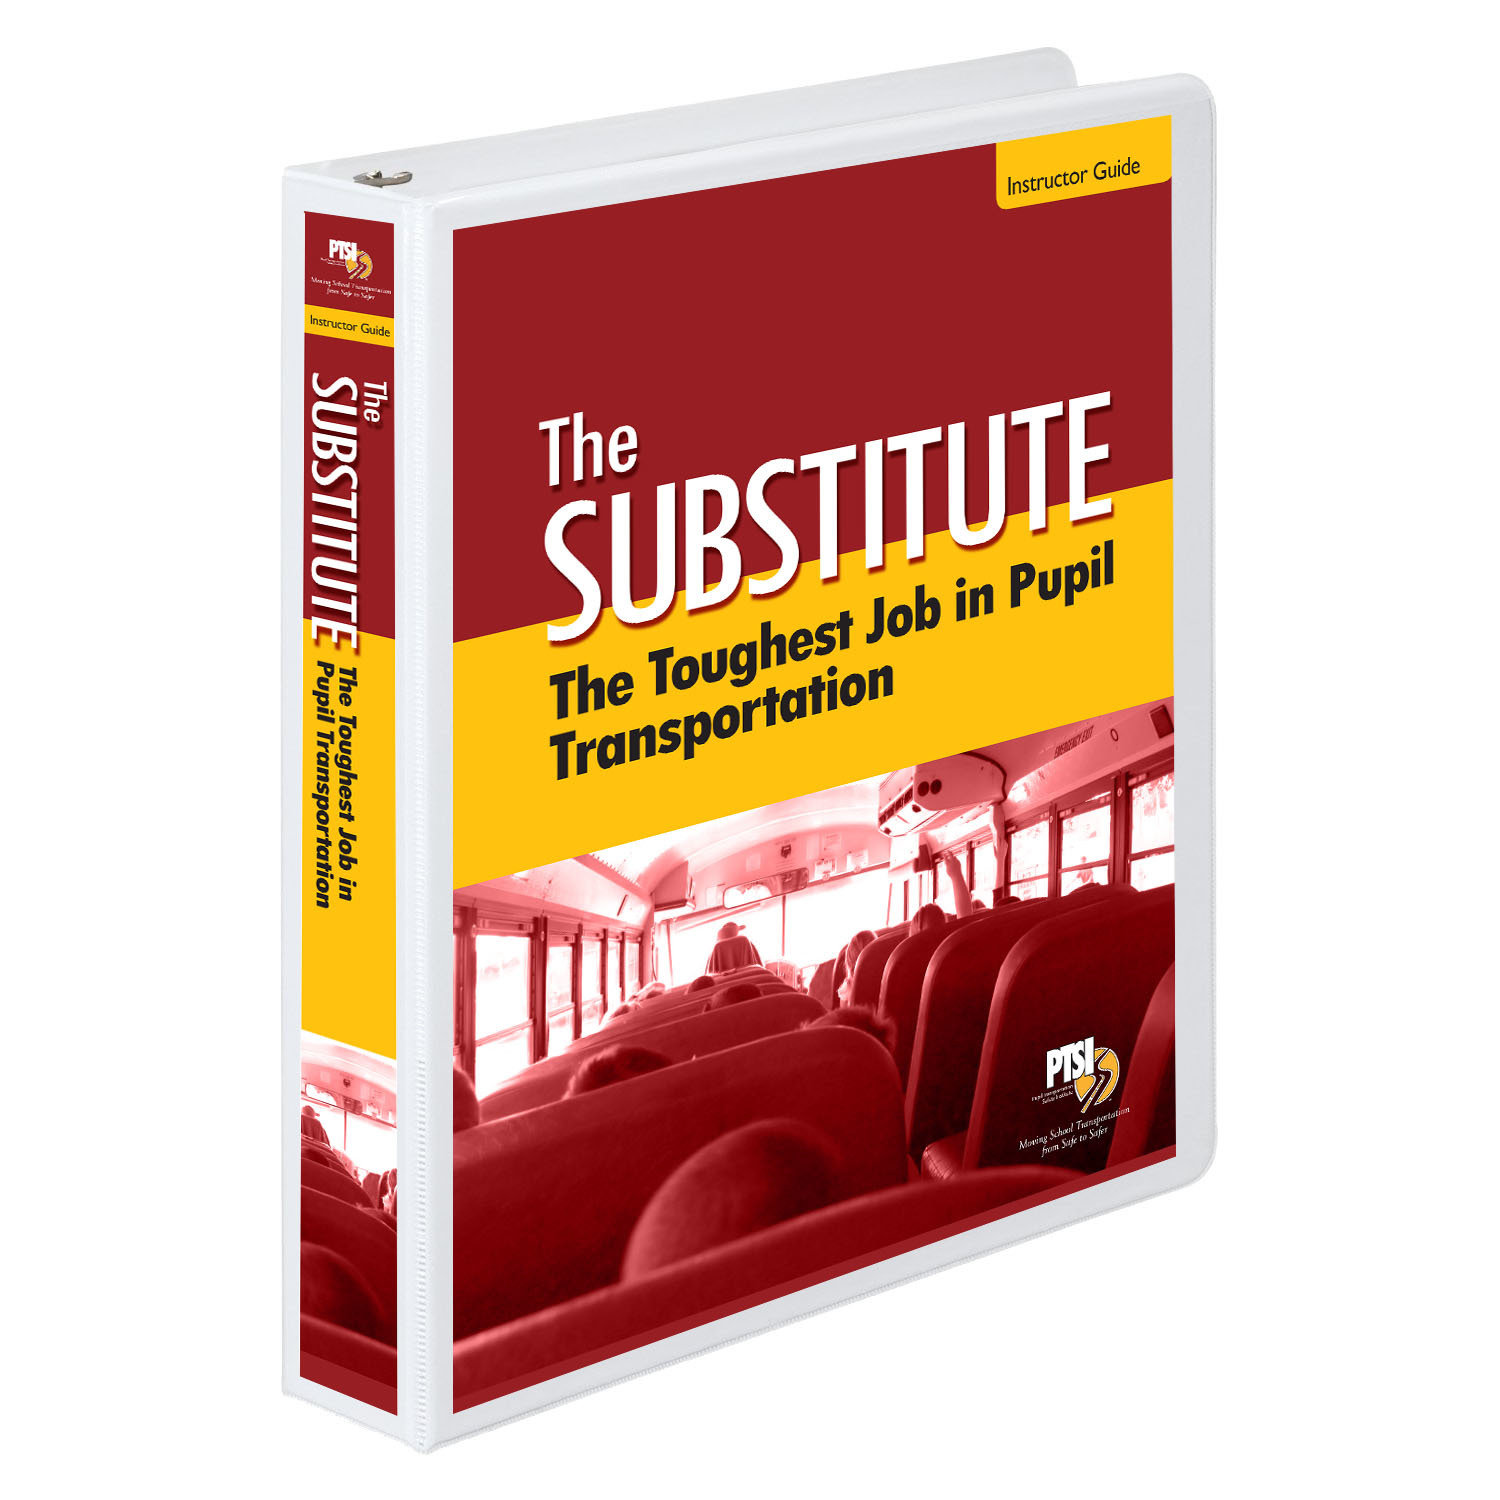 The Substitute: The Toughest Job in Pupil Transportation Training Curriculum